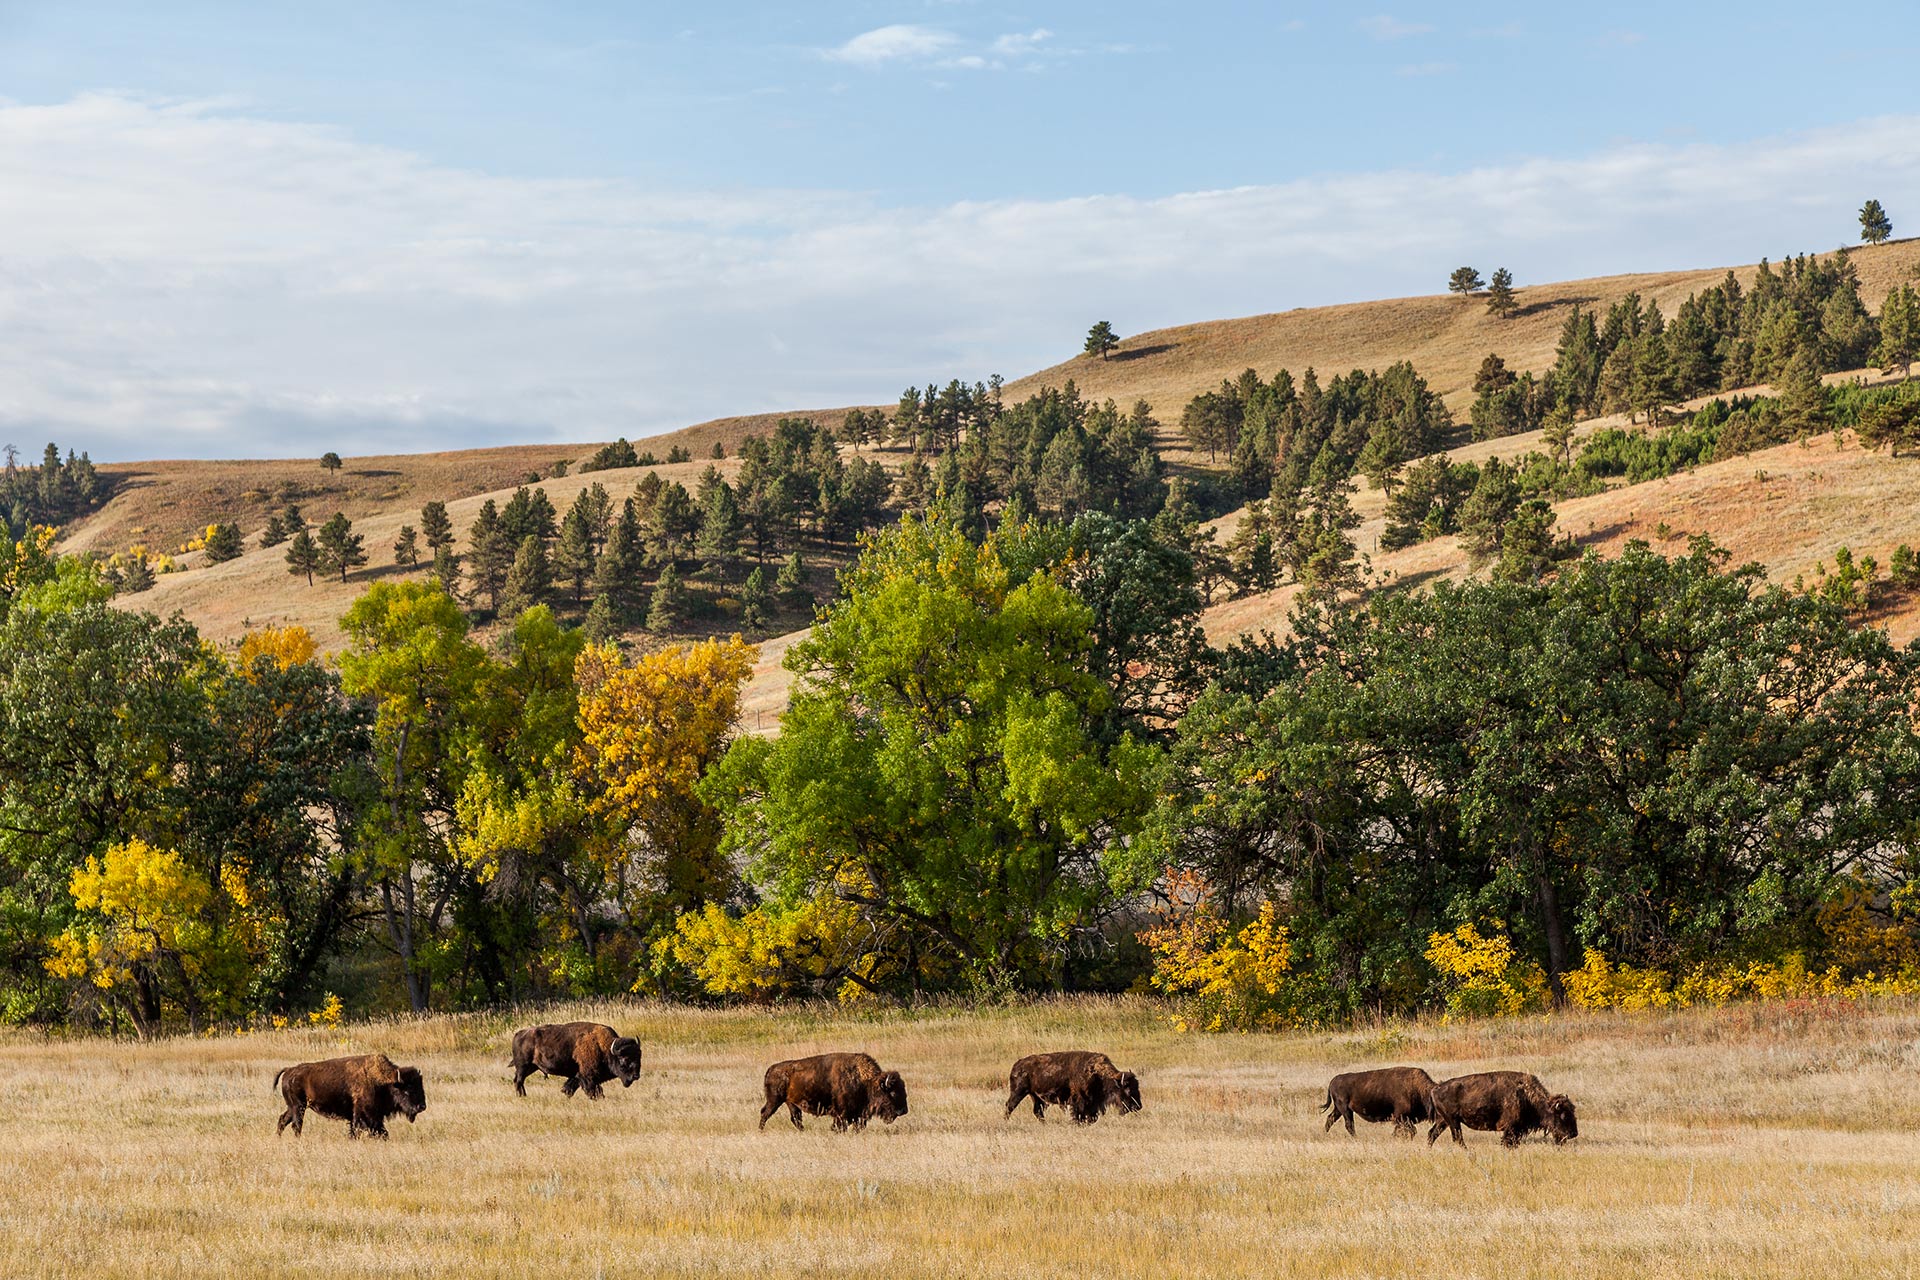 Bison at Custer State Park in South Dakota